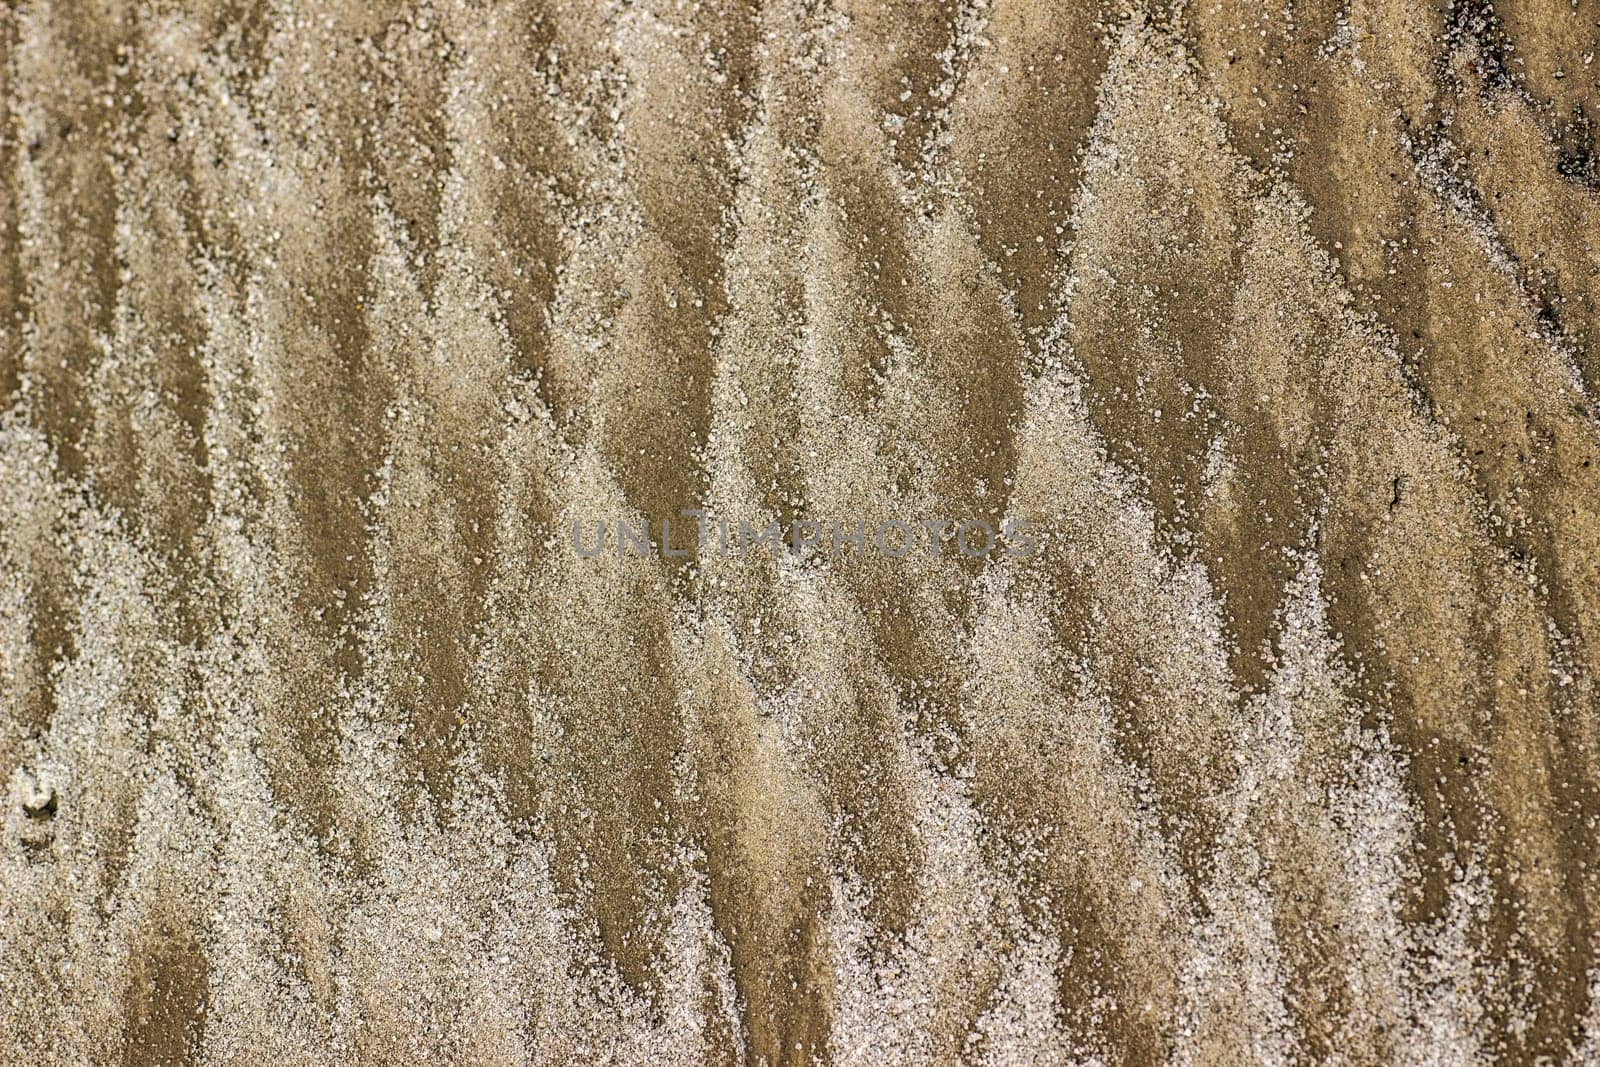 Cracked dry ground sand. Texture, background by lanart